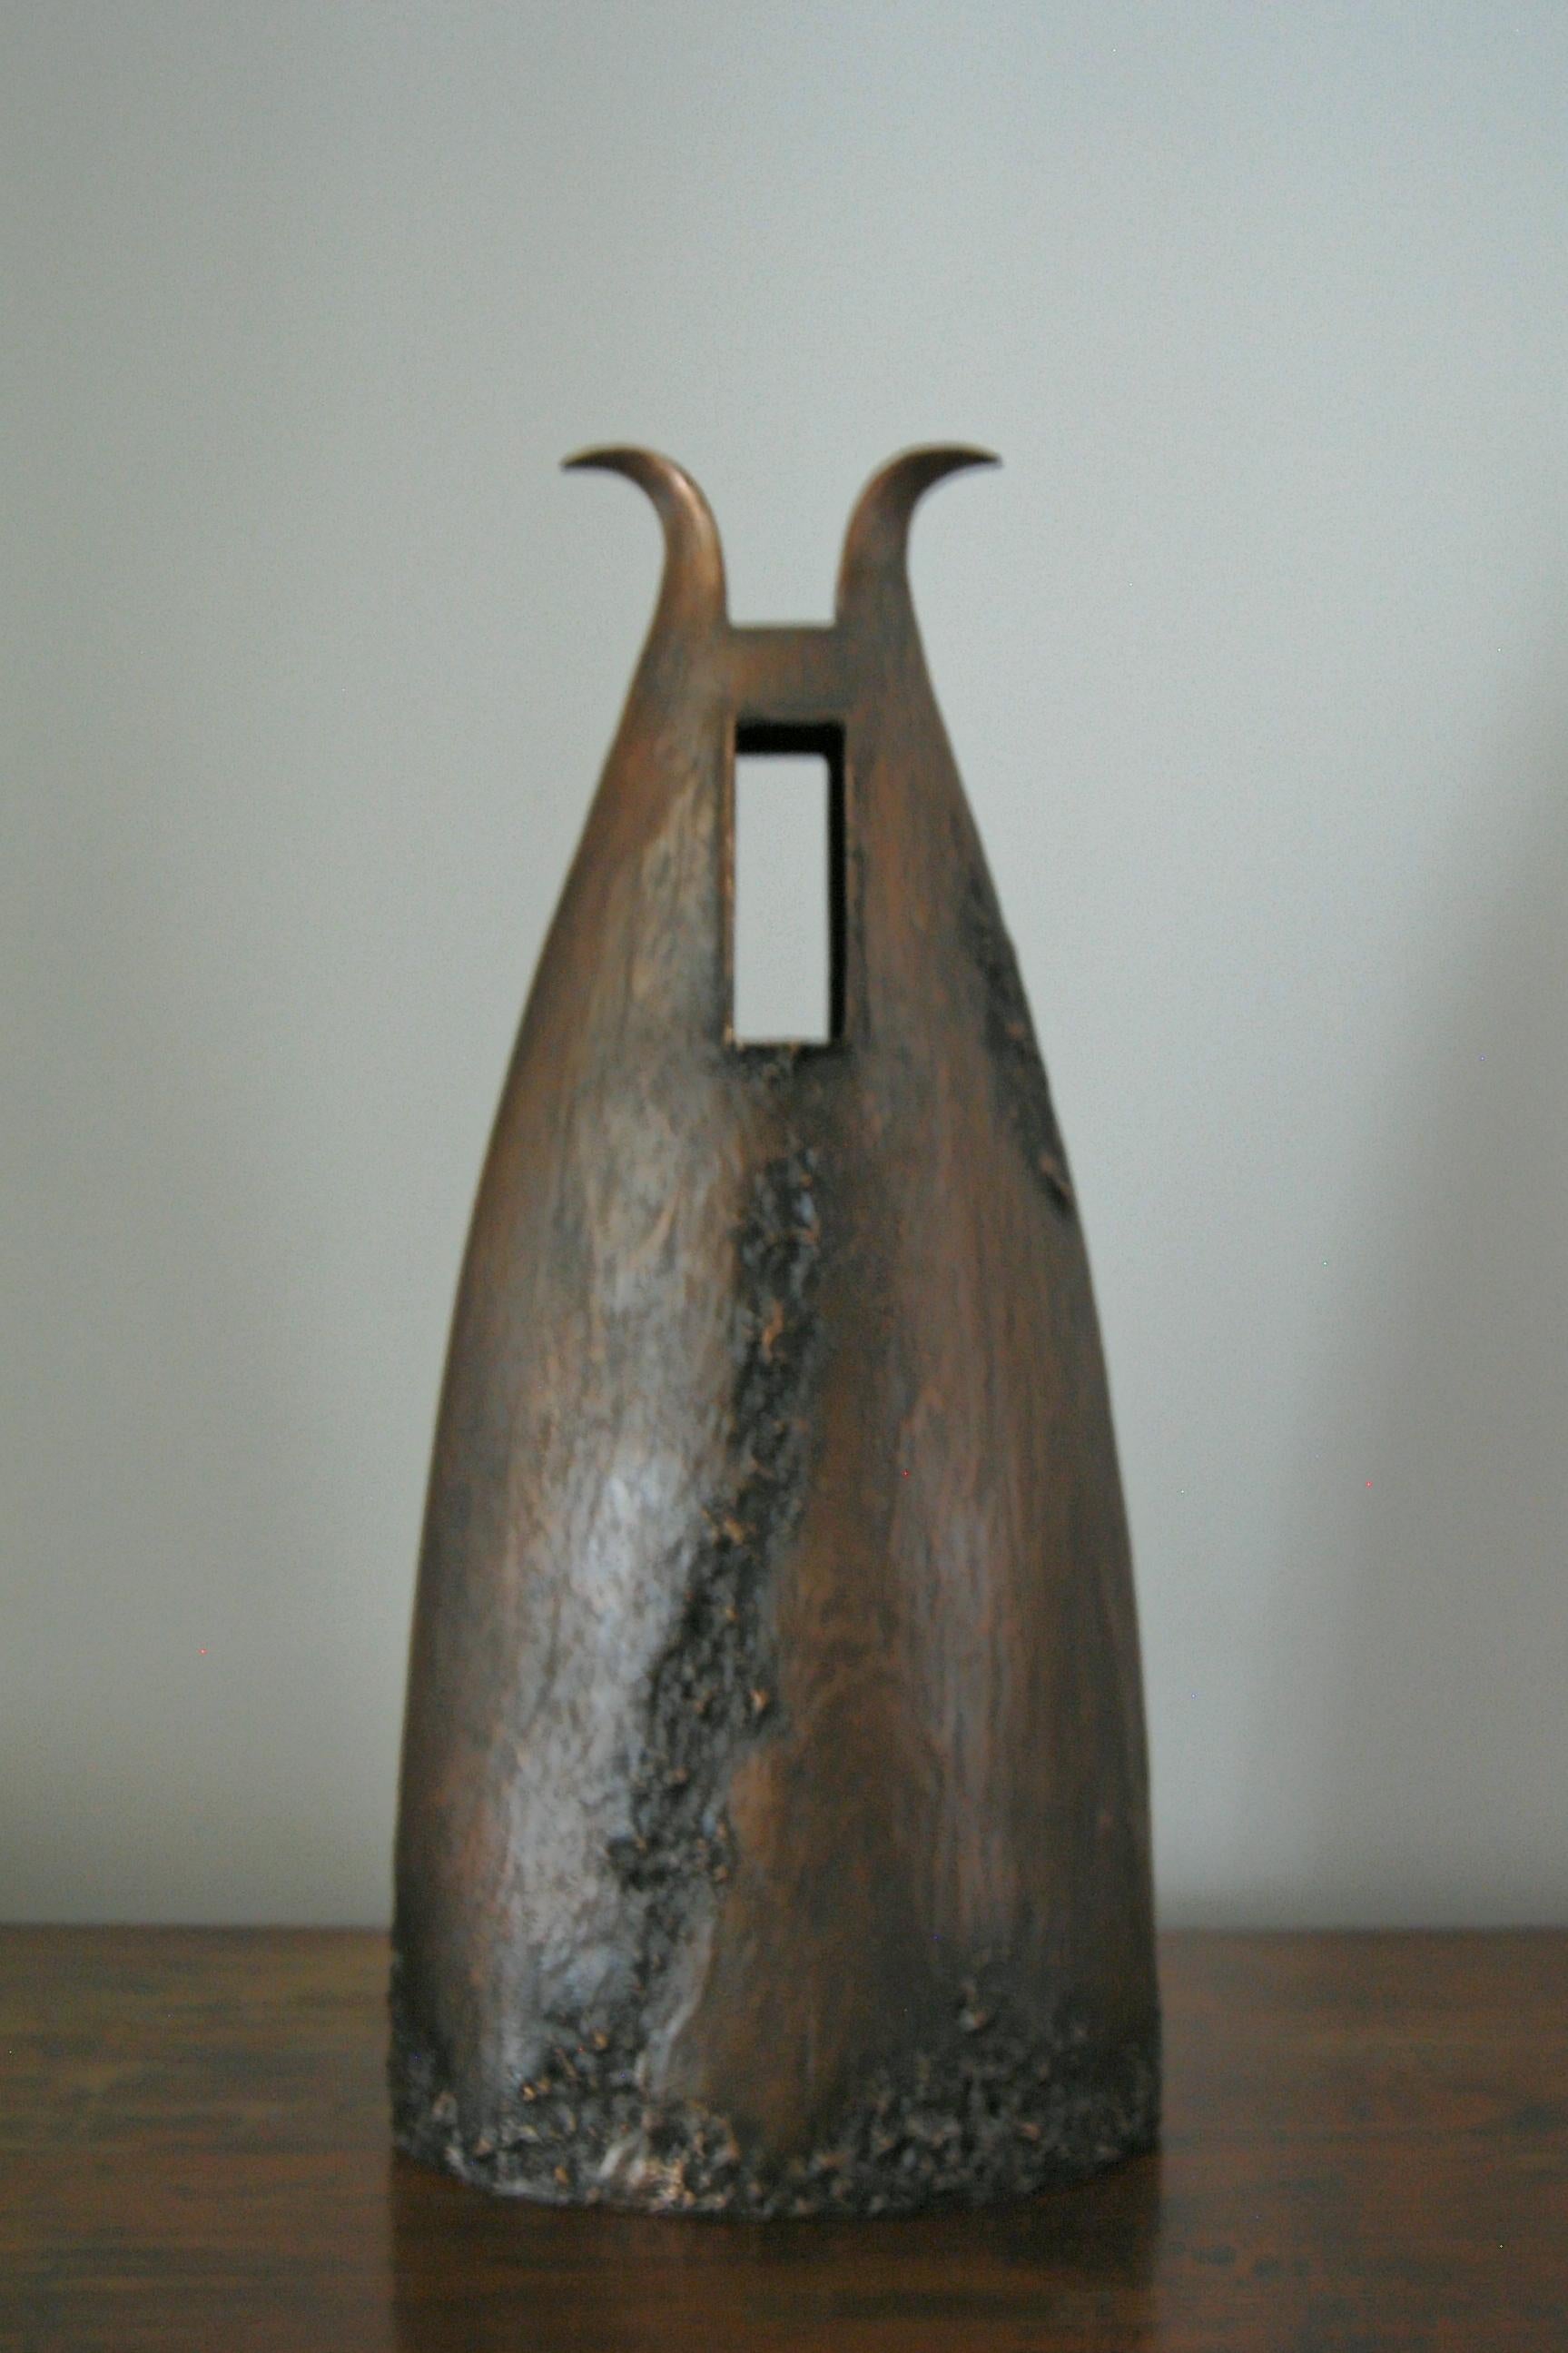 Long vase in dark bronze by FAKASAKA Design
Dimensions: W 19 x D 12 x H 41.5 cm
Materials: Dark bronze.
 